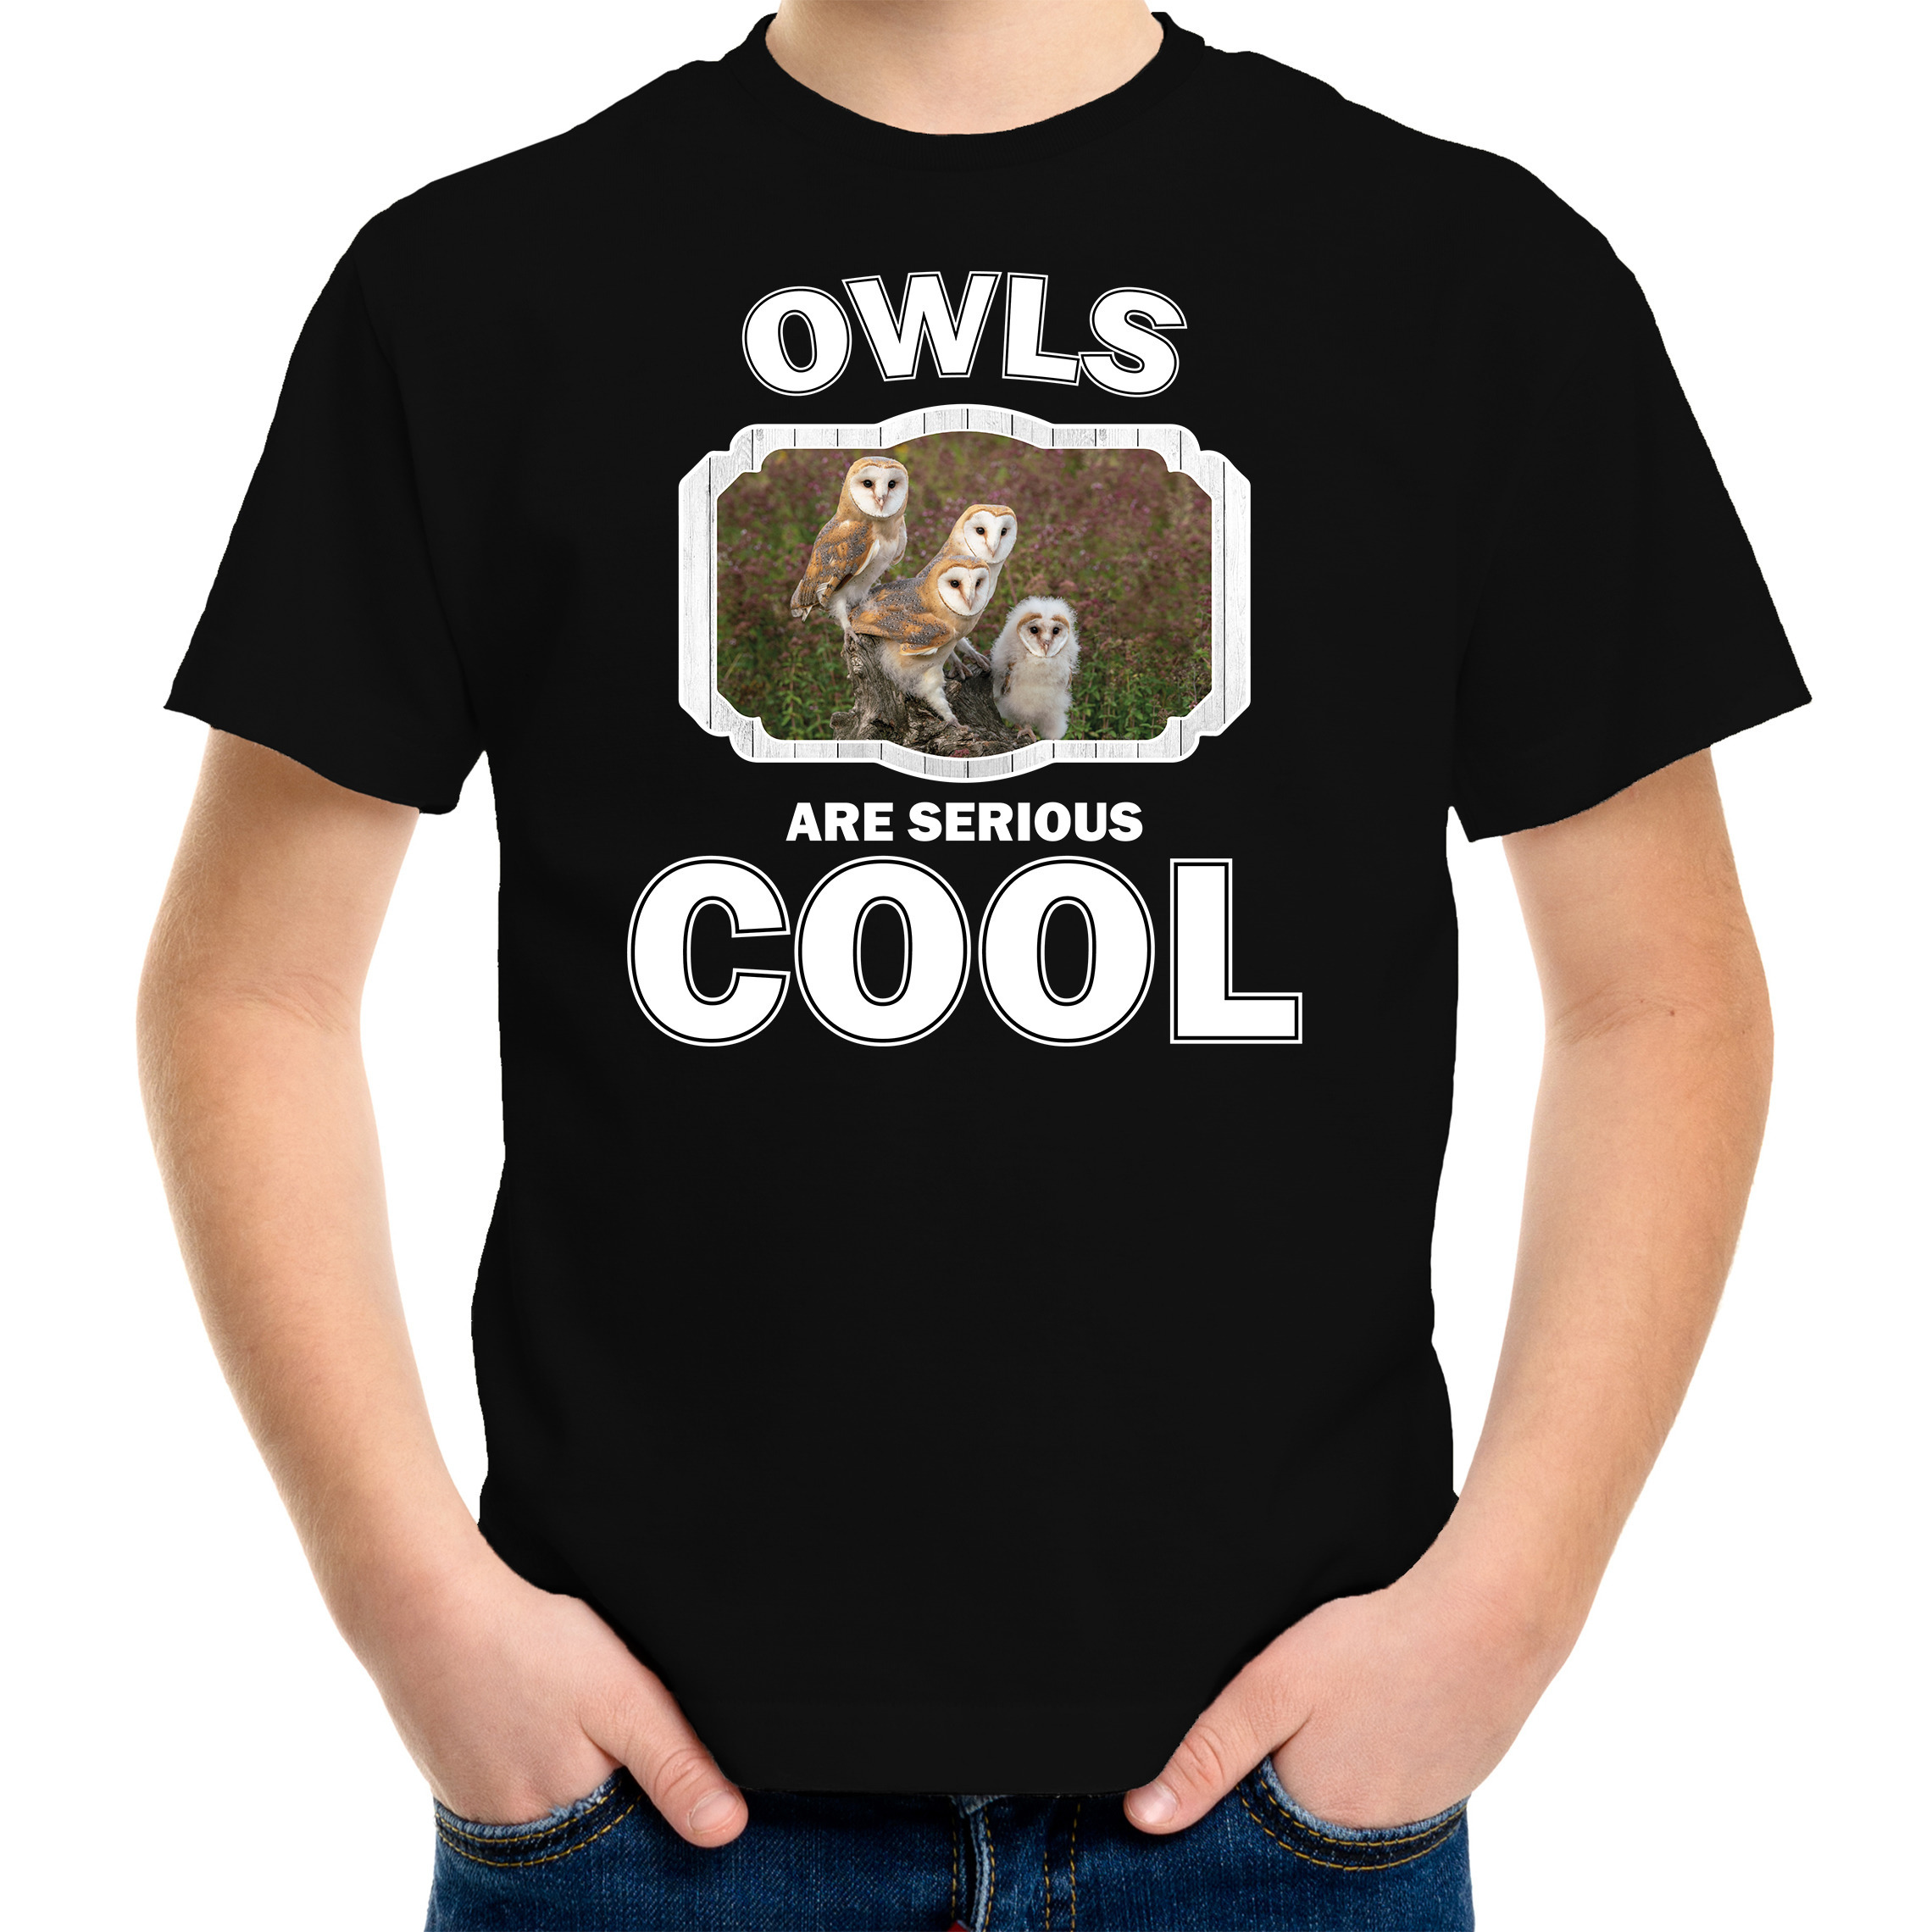 Dieren kerkuil t-shirt zwart kinderen owls are cool shirt jongens en meisjes